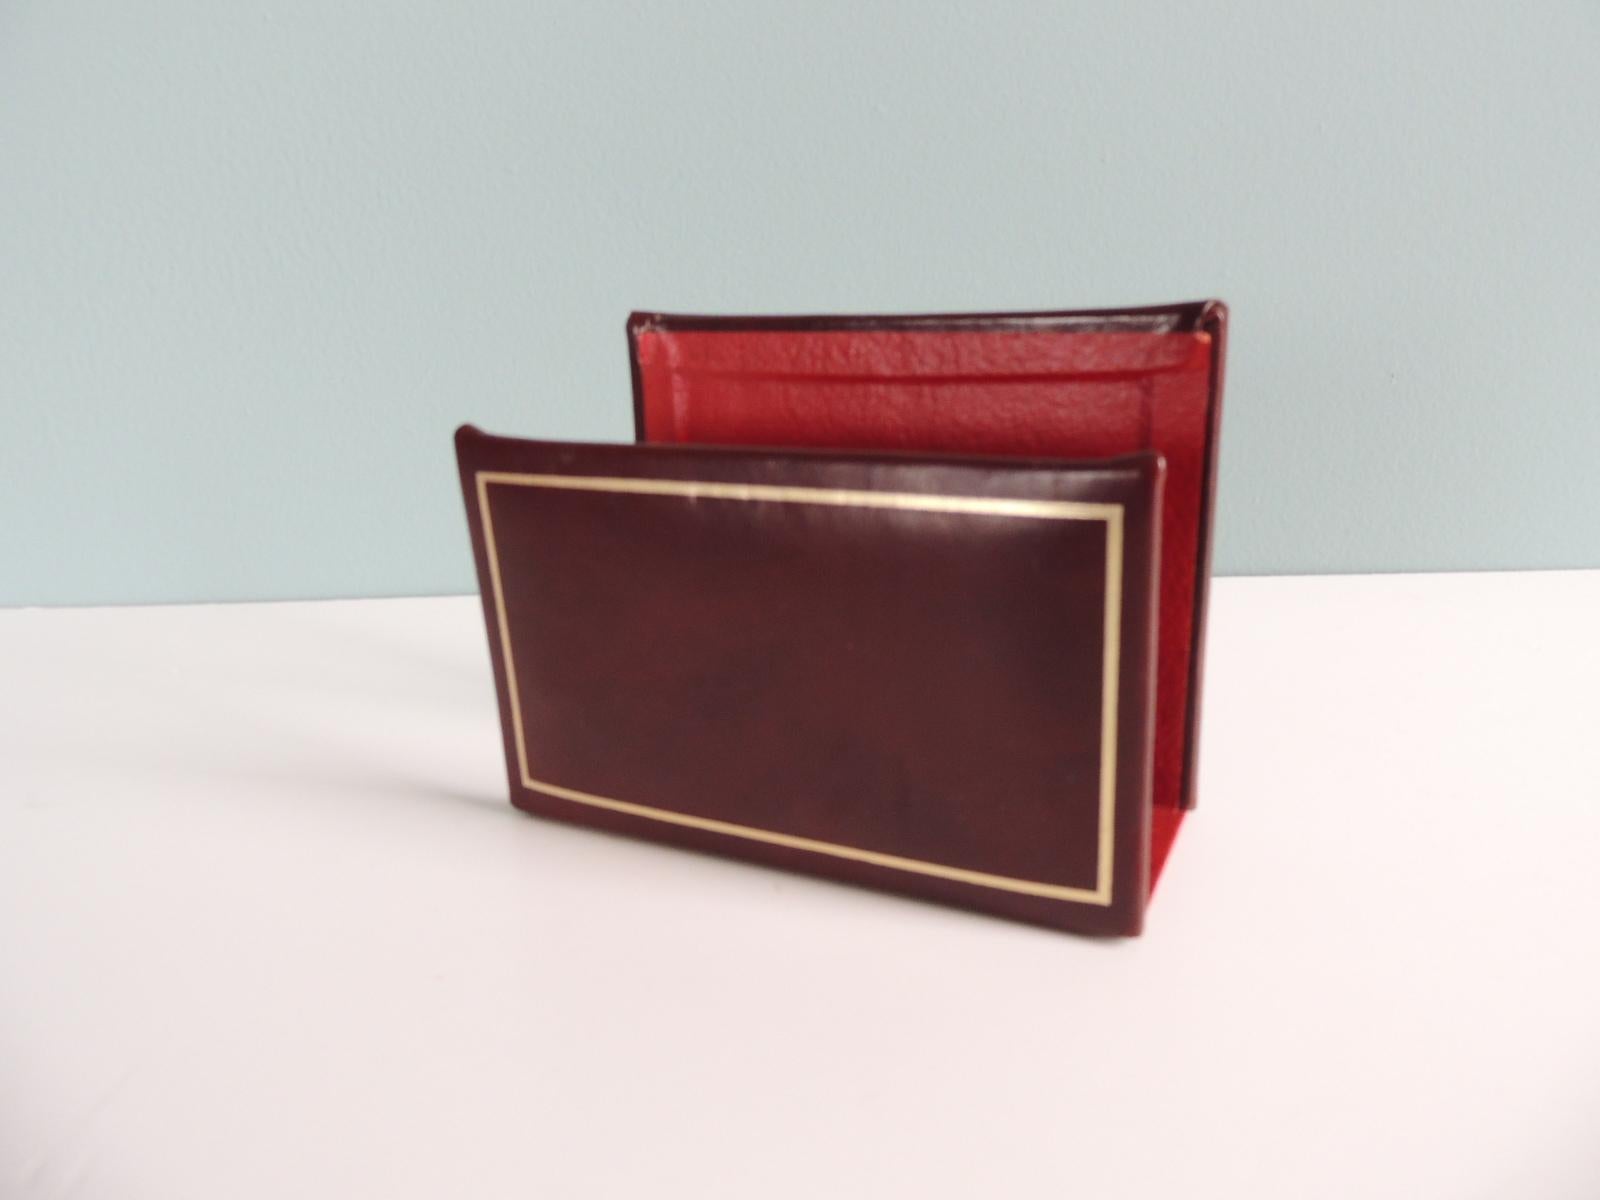 Embossed Brown Reddish Leather Stationary or Letter Holder For Sale